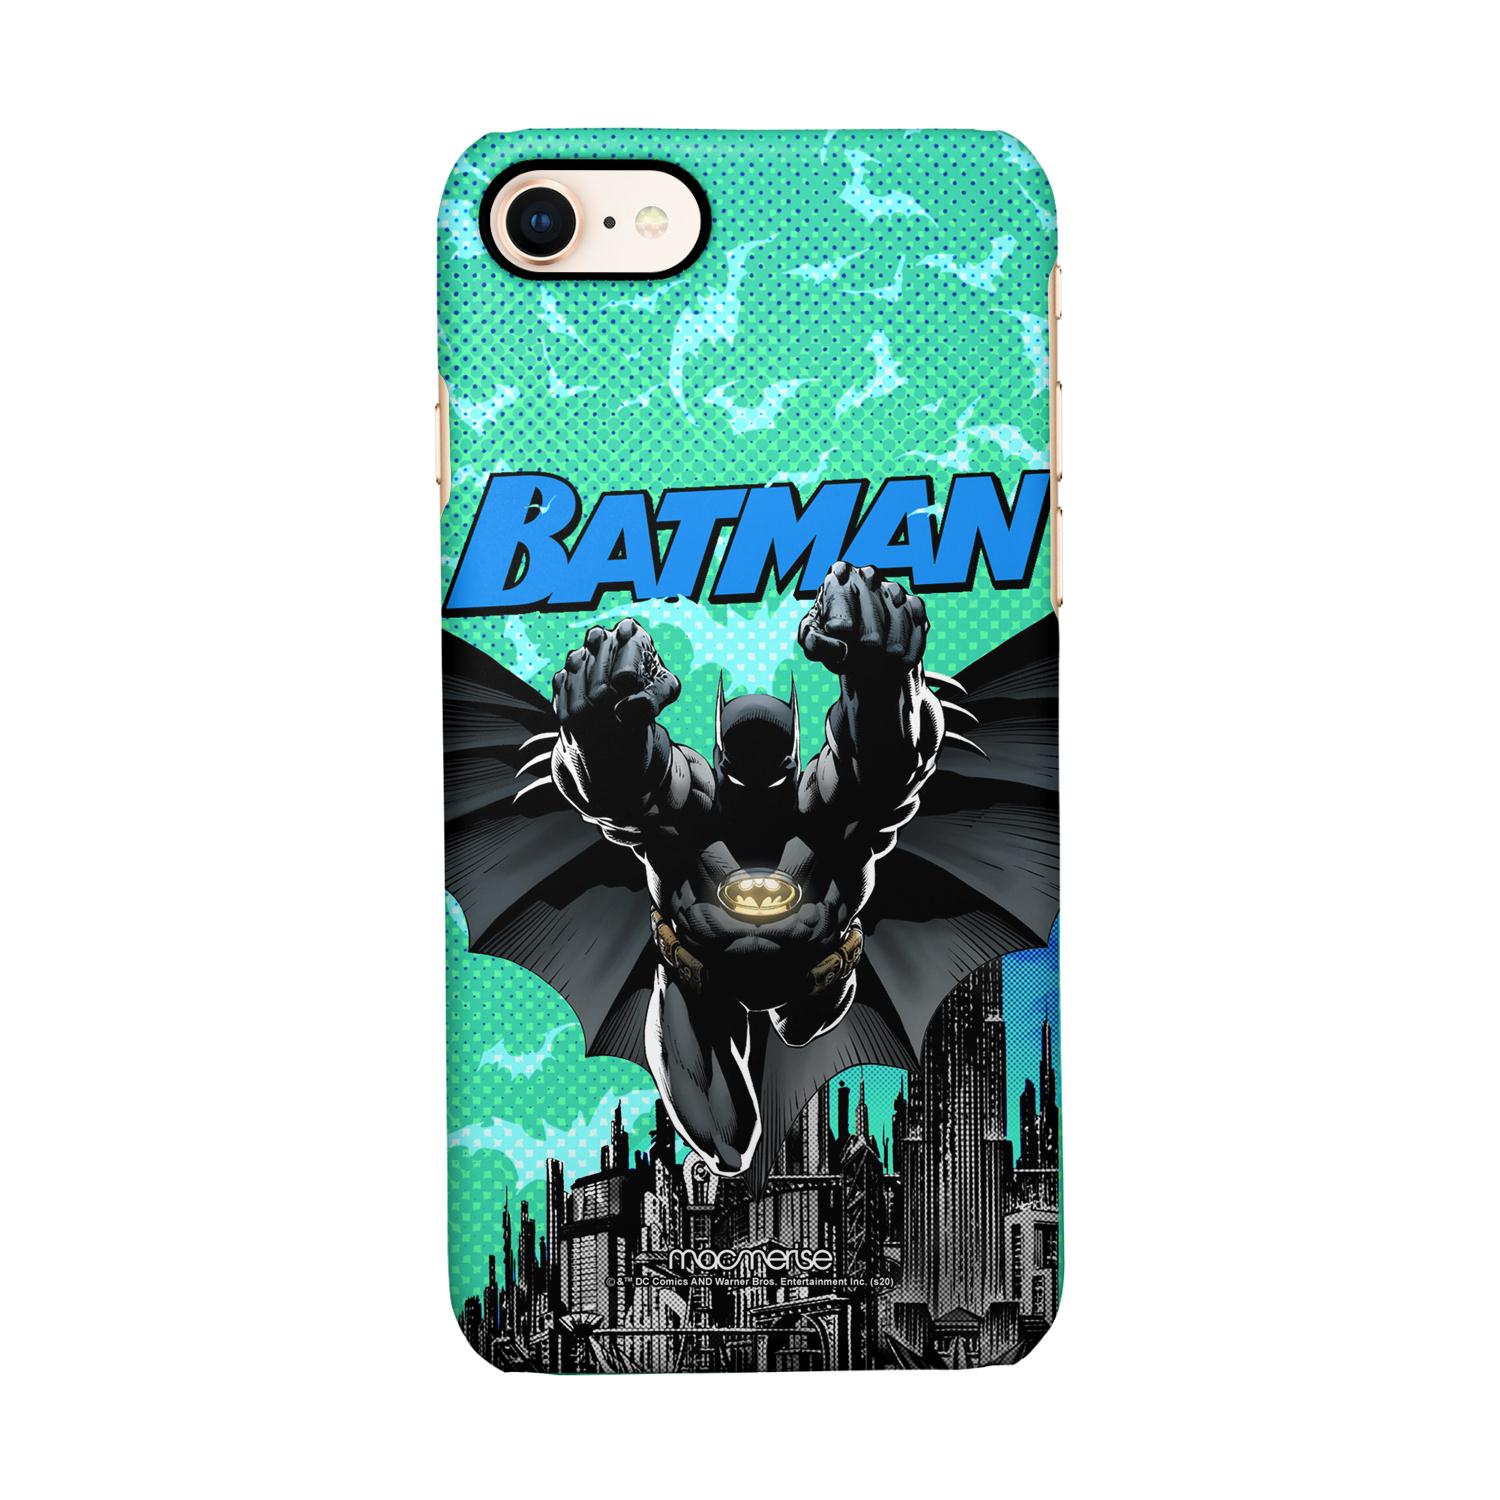 Buy Bat on the hunt - Sleek Phone Case for iPhone 7 Online